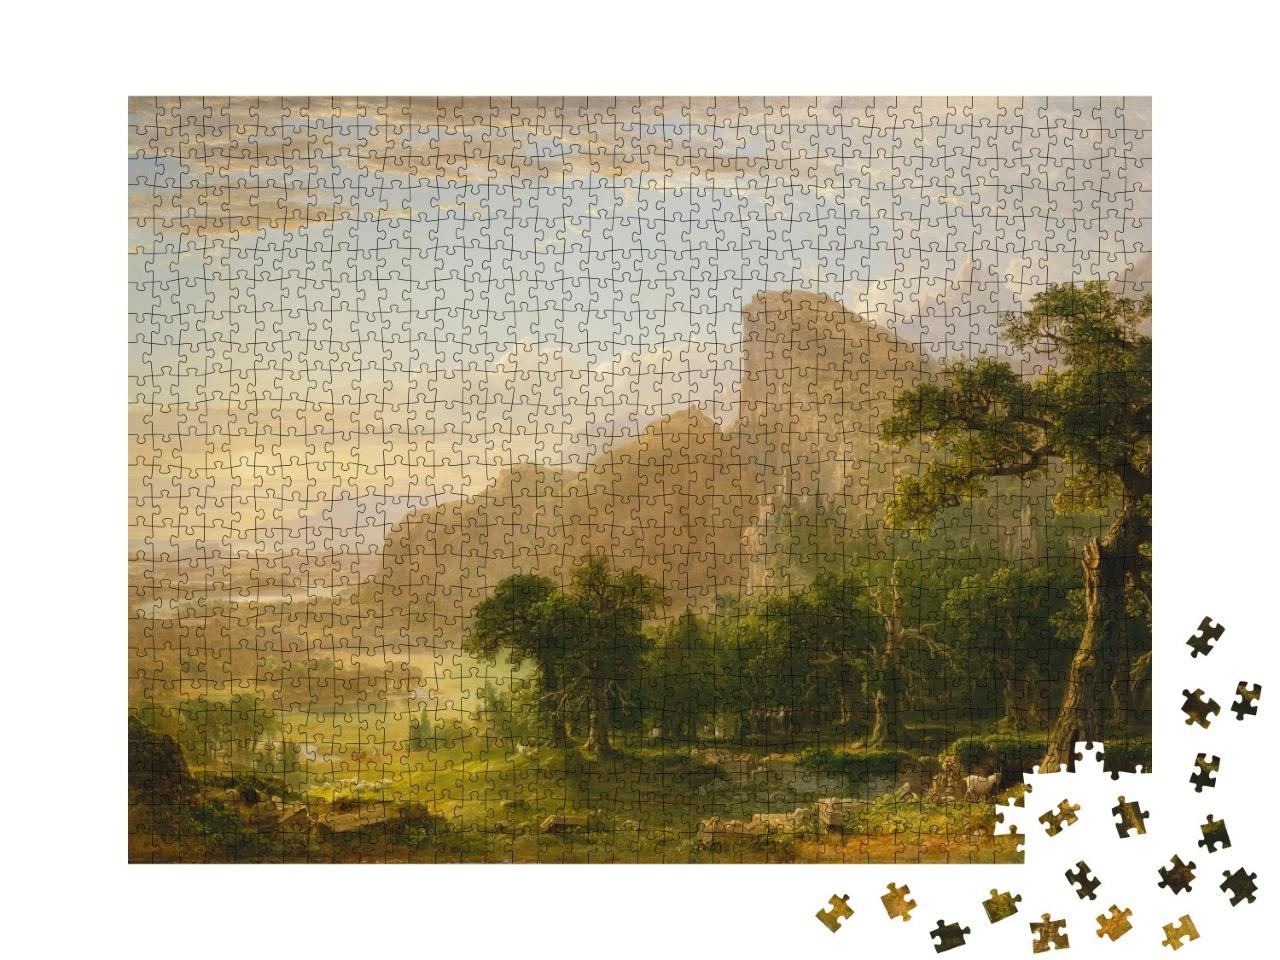 Puzzle 1000 Teile „Asher Brown Durand - Landschaft - Szene aus Thanatopsis“